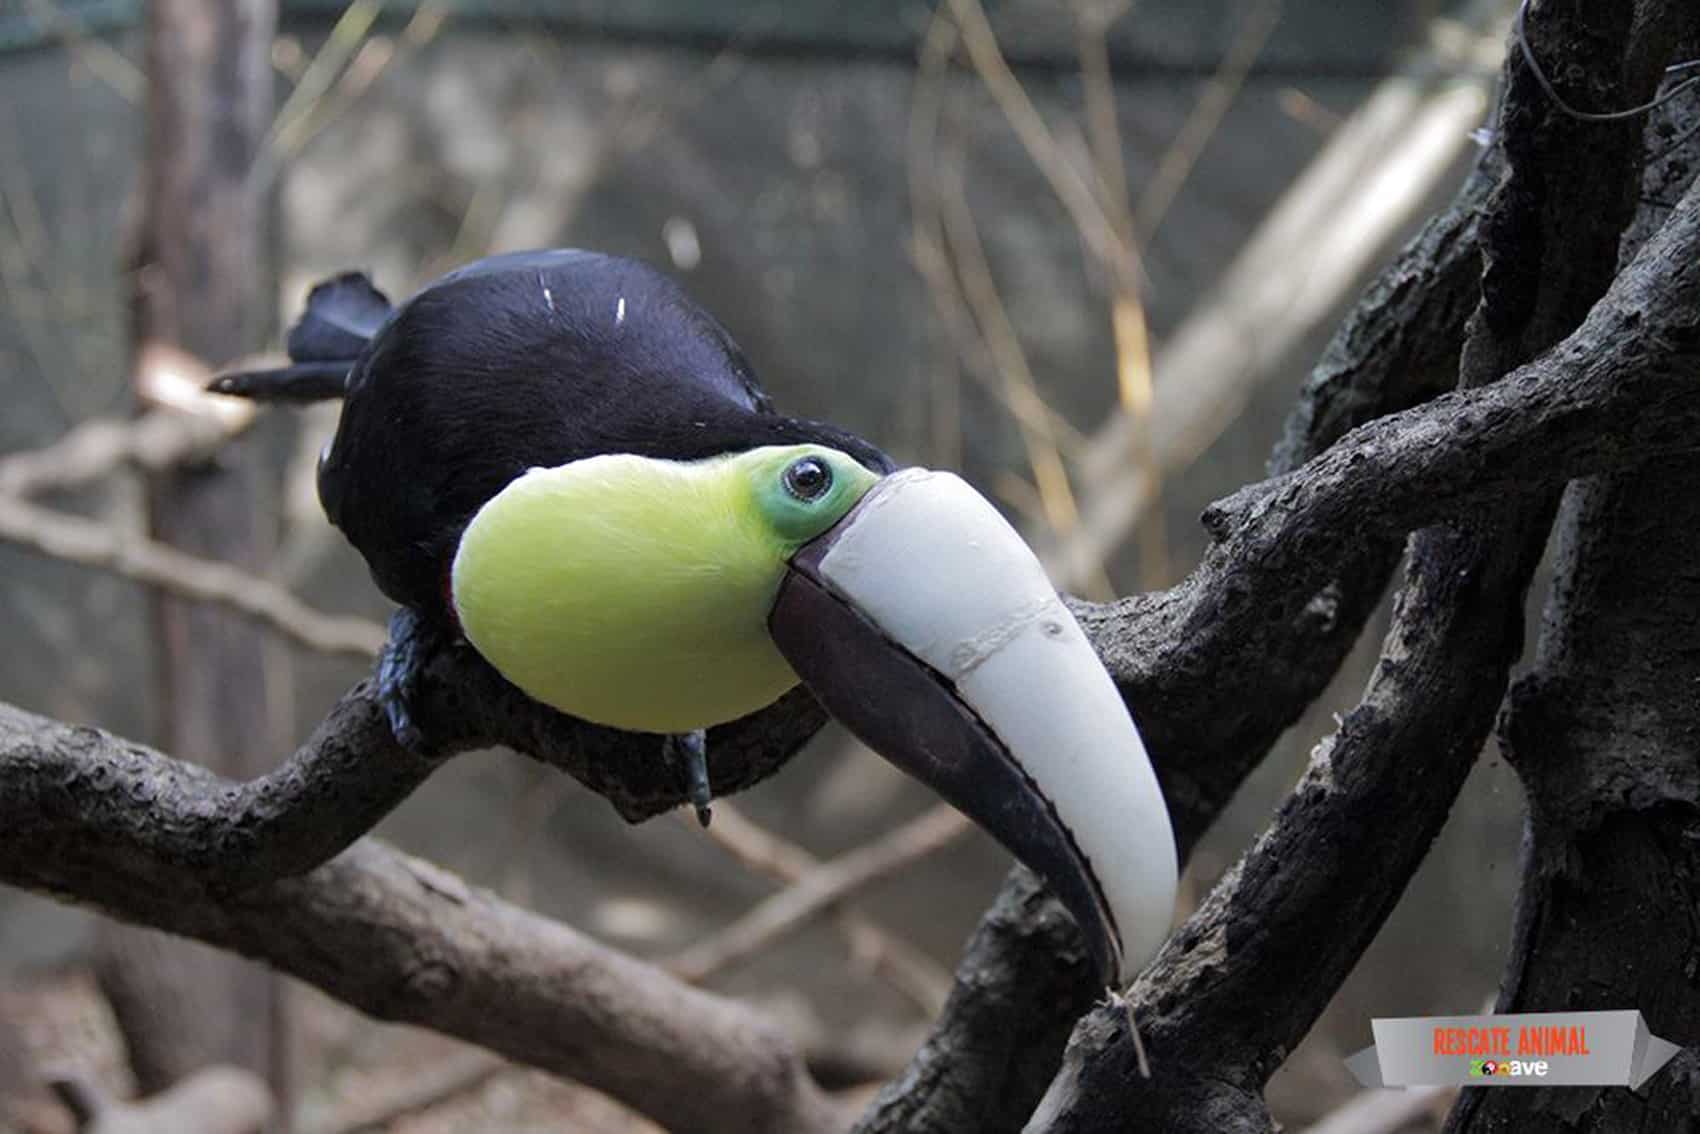 Grecia, the Costa Rica toucan with his new prothetic beak